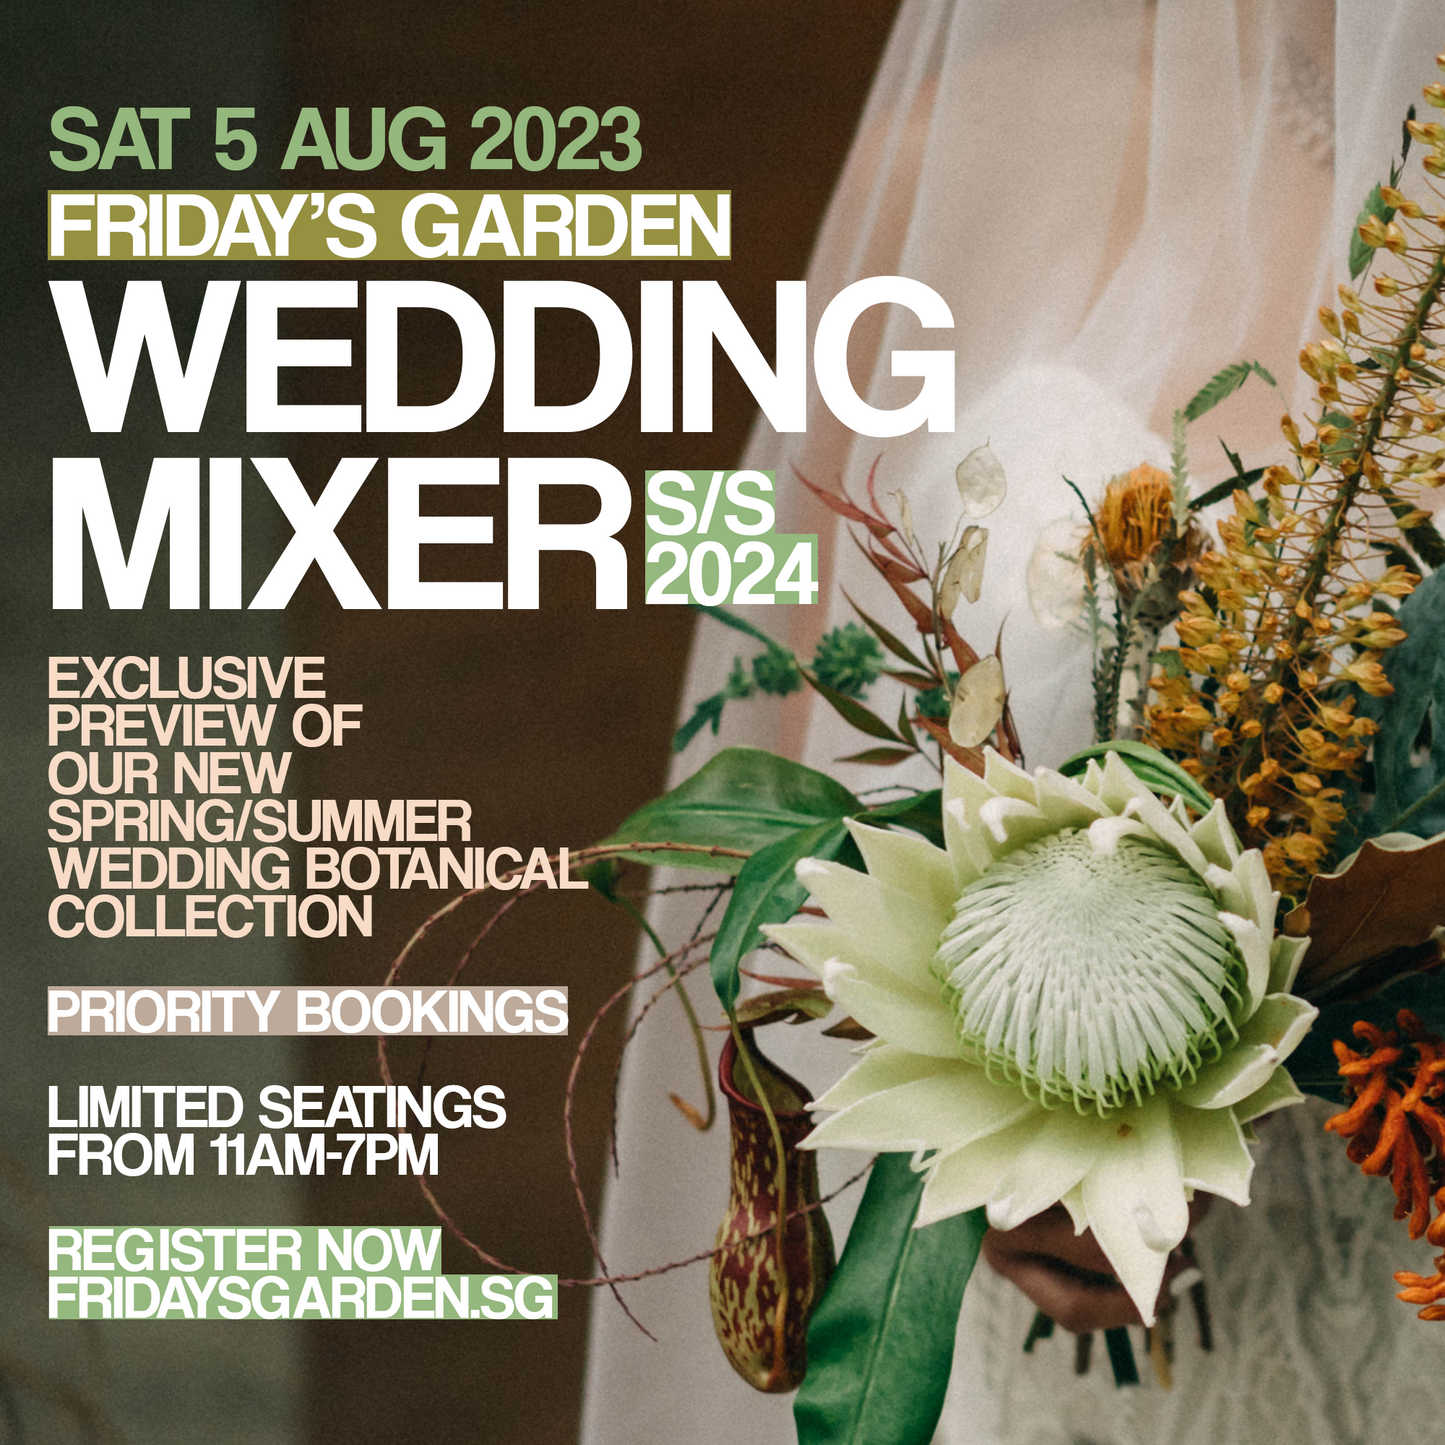 Wedding Mixer S/S 2024